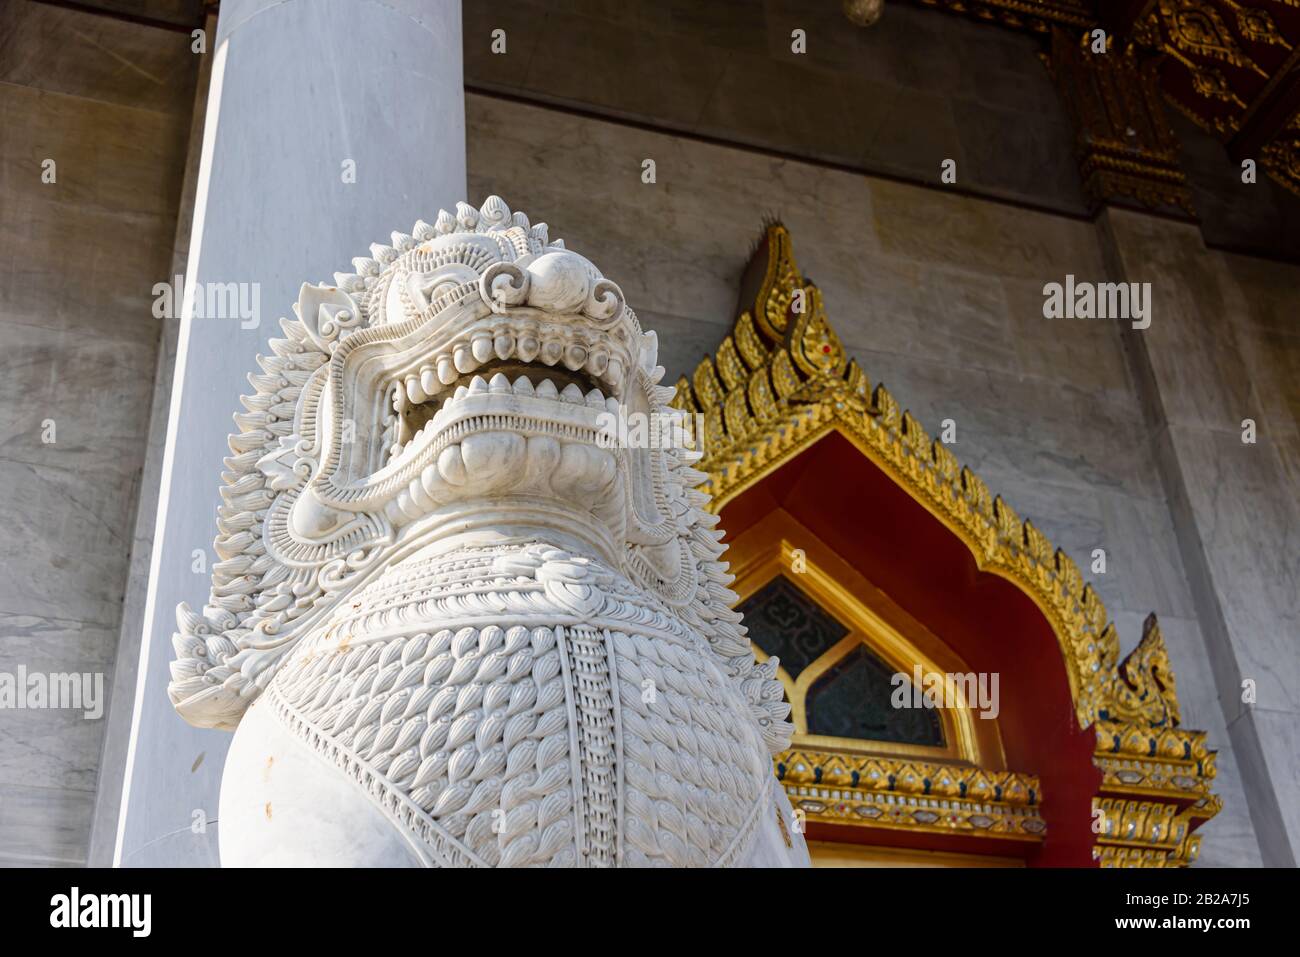 Singa (traditioneller, mythologischer Löwe), der den Eingang des Wat Benchamabophit (Der Marmortempel), Bangkok, Thailand, bewacht Stockfoto